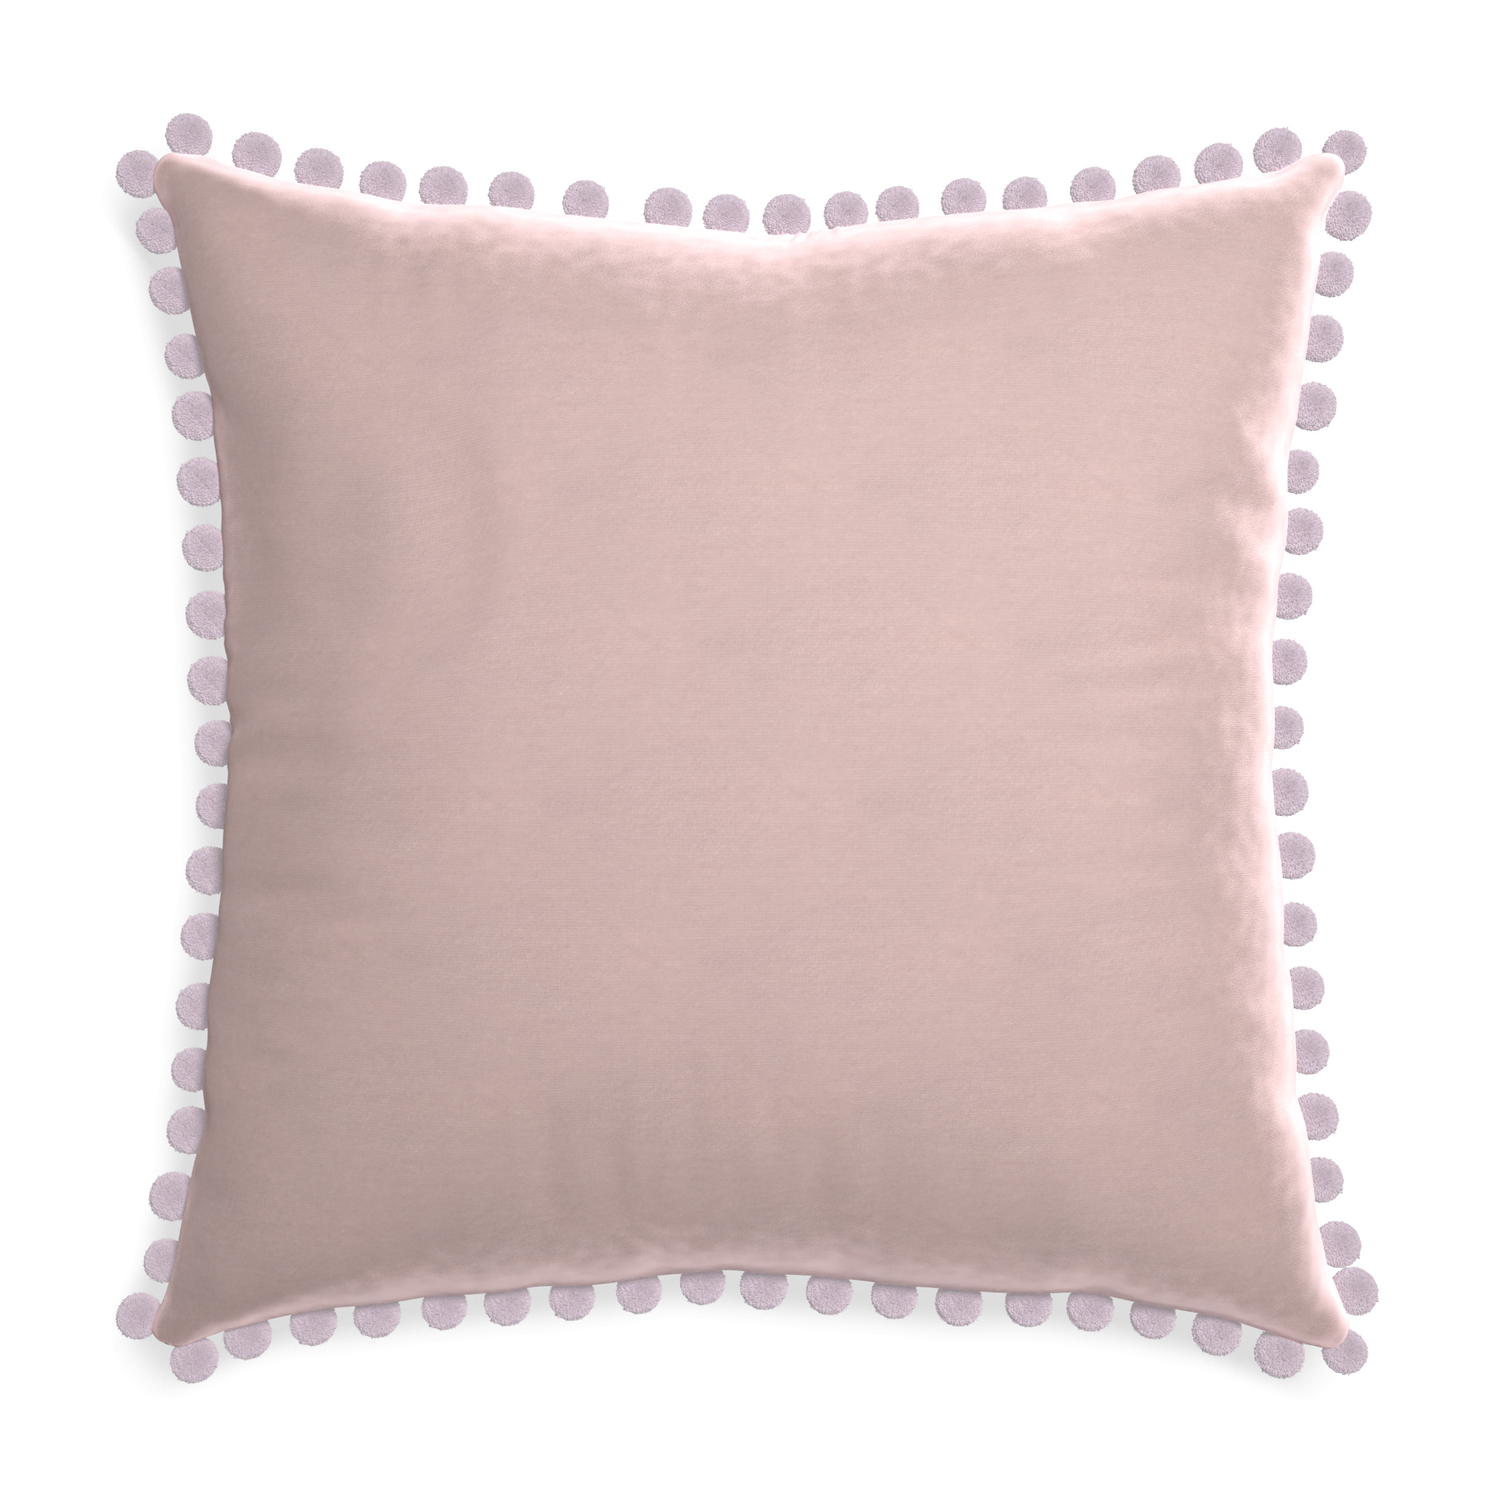 square light pink velvet pillow with lilac pom poms